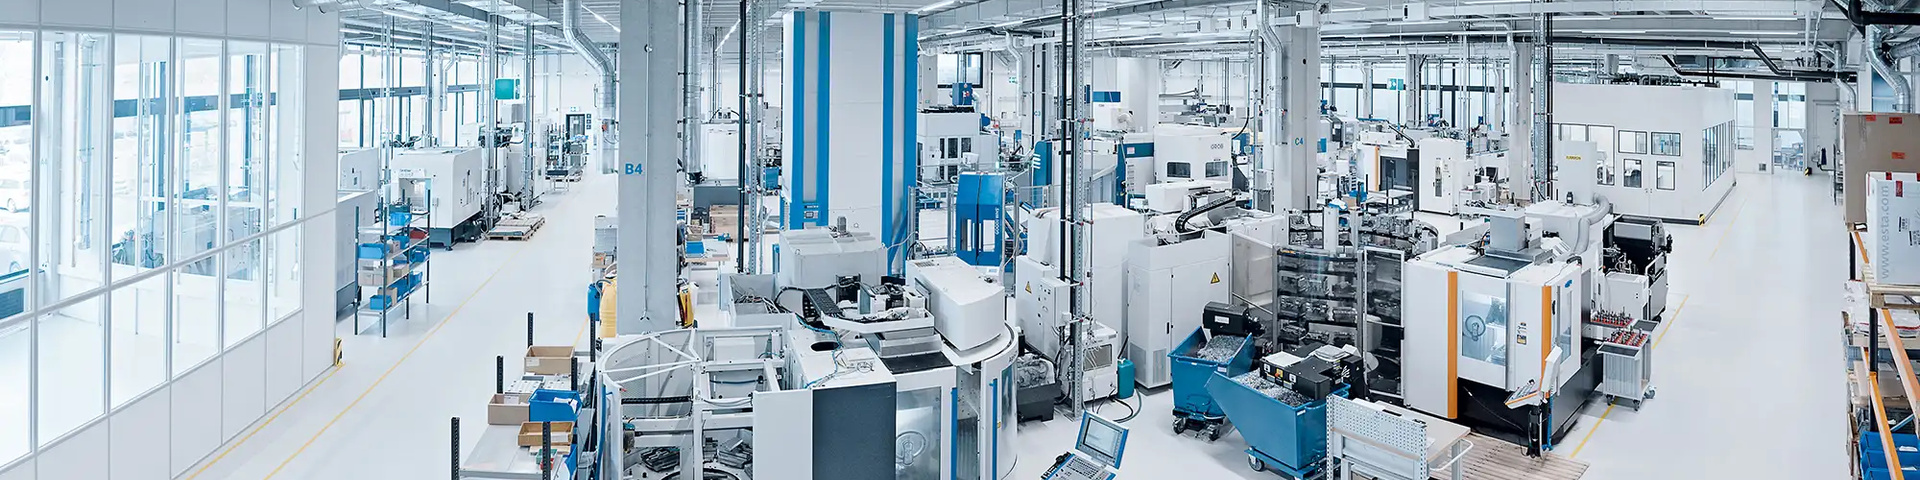 CNC milling operator